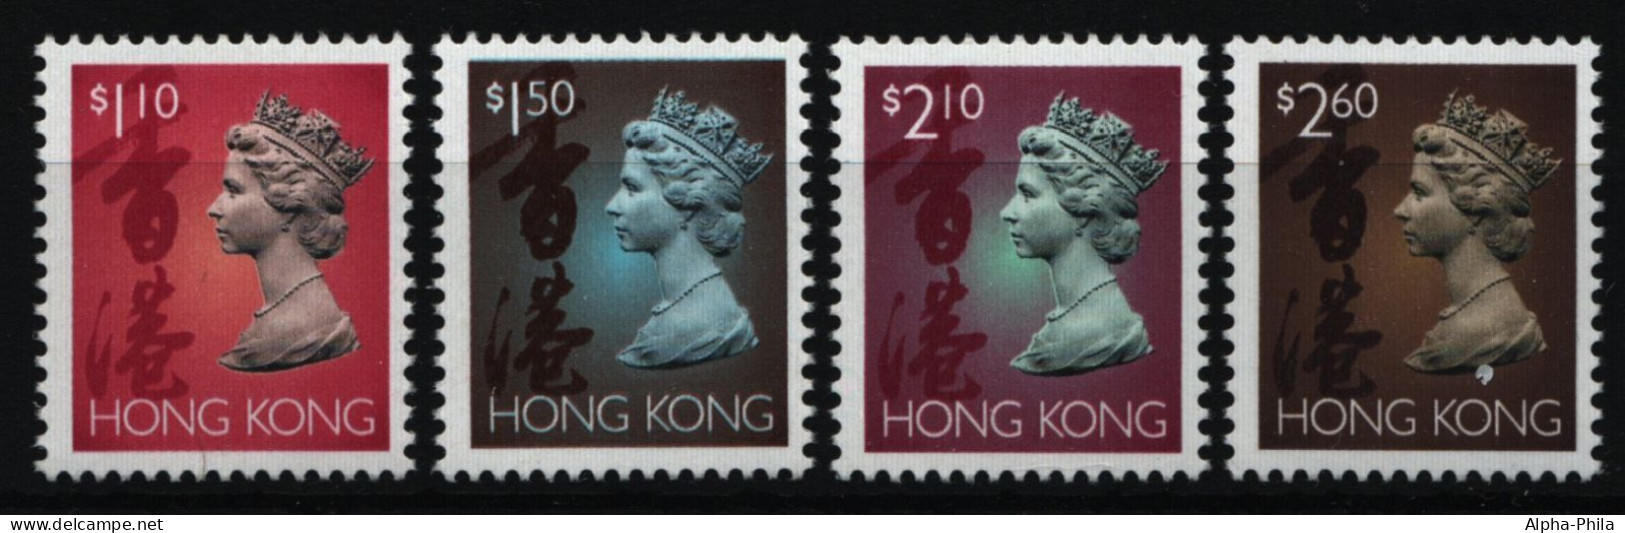 Hongkong 1995 - Mi-Nr. 744-747 I X ** - MNH - Freimarken - Queen Elizabeth II - Nuevos